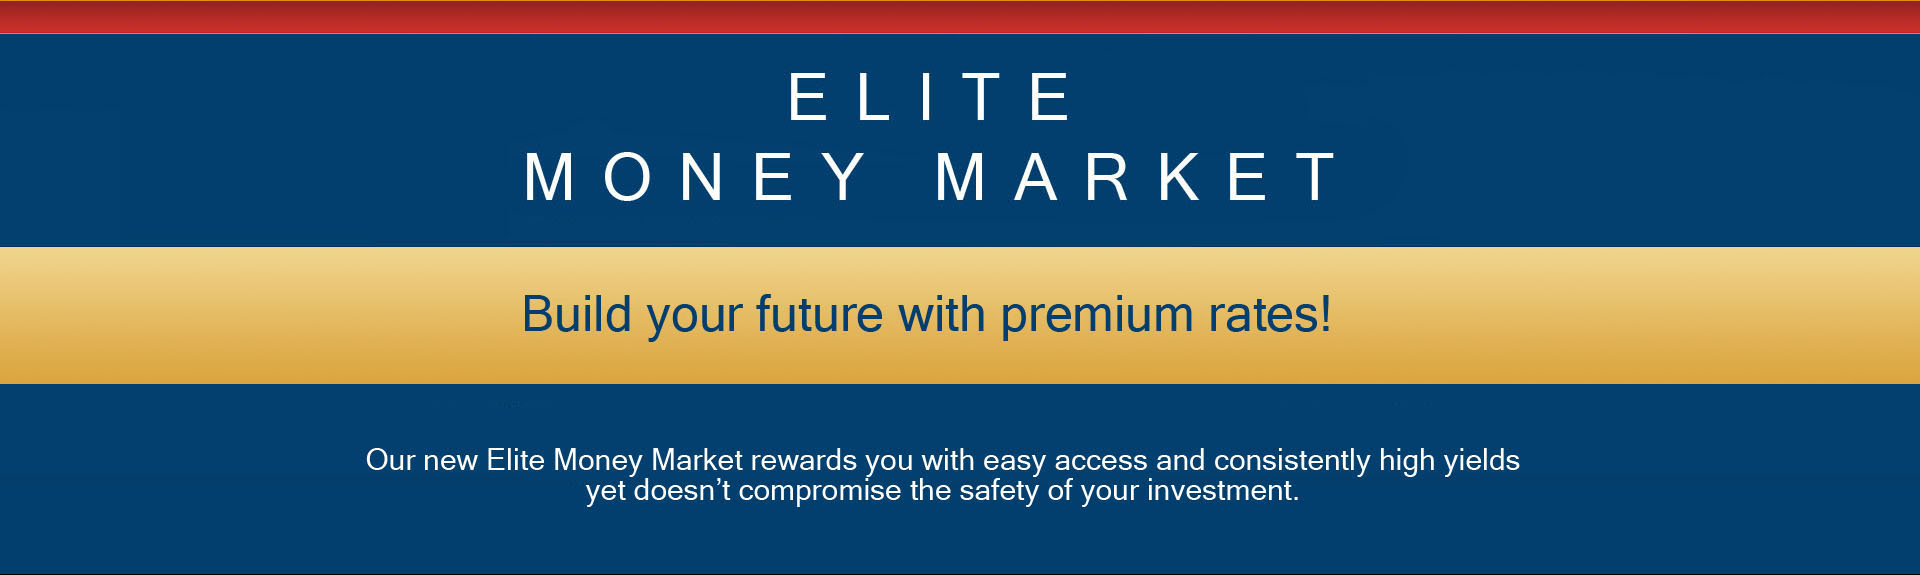 Elite Money Market